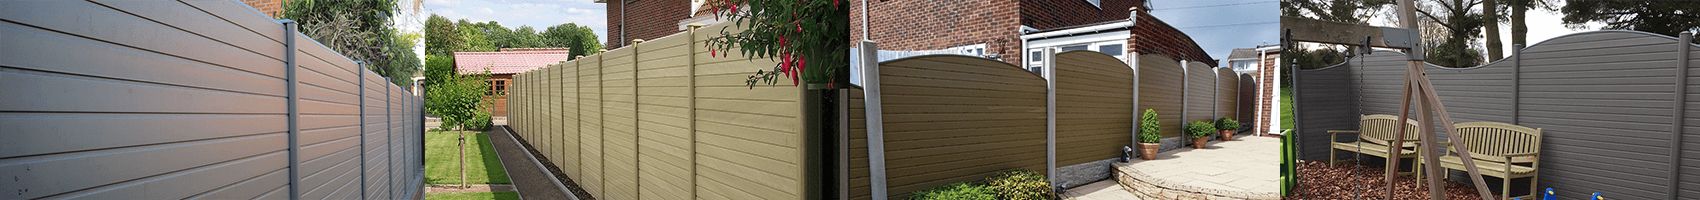 PVC Composite Fence Post Anti Theft Clip